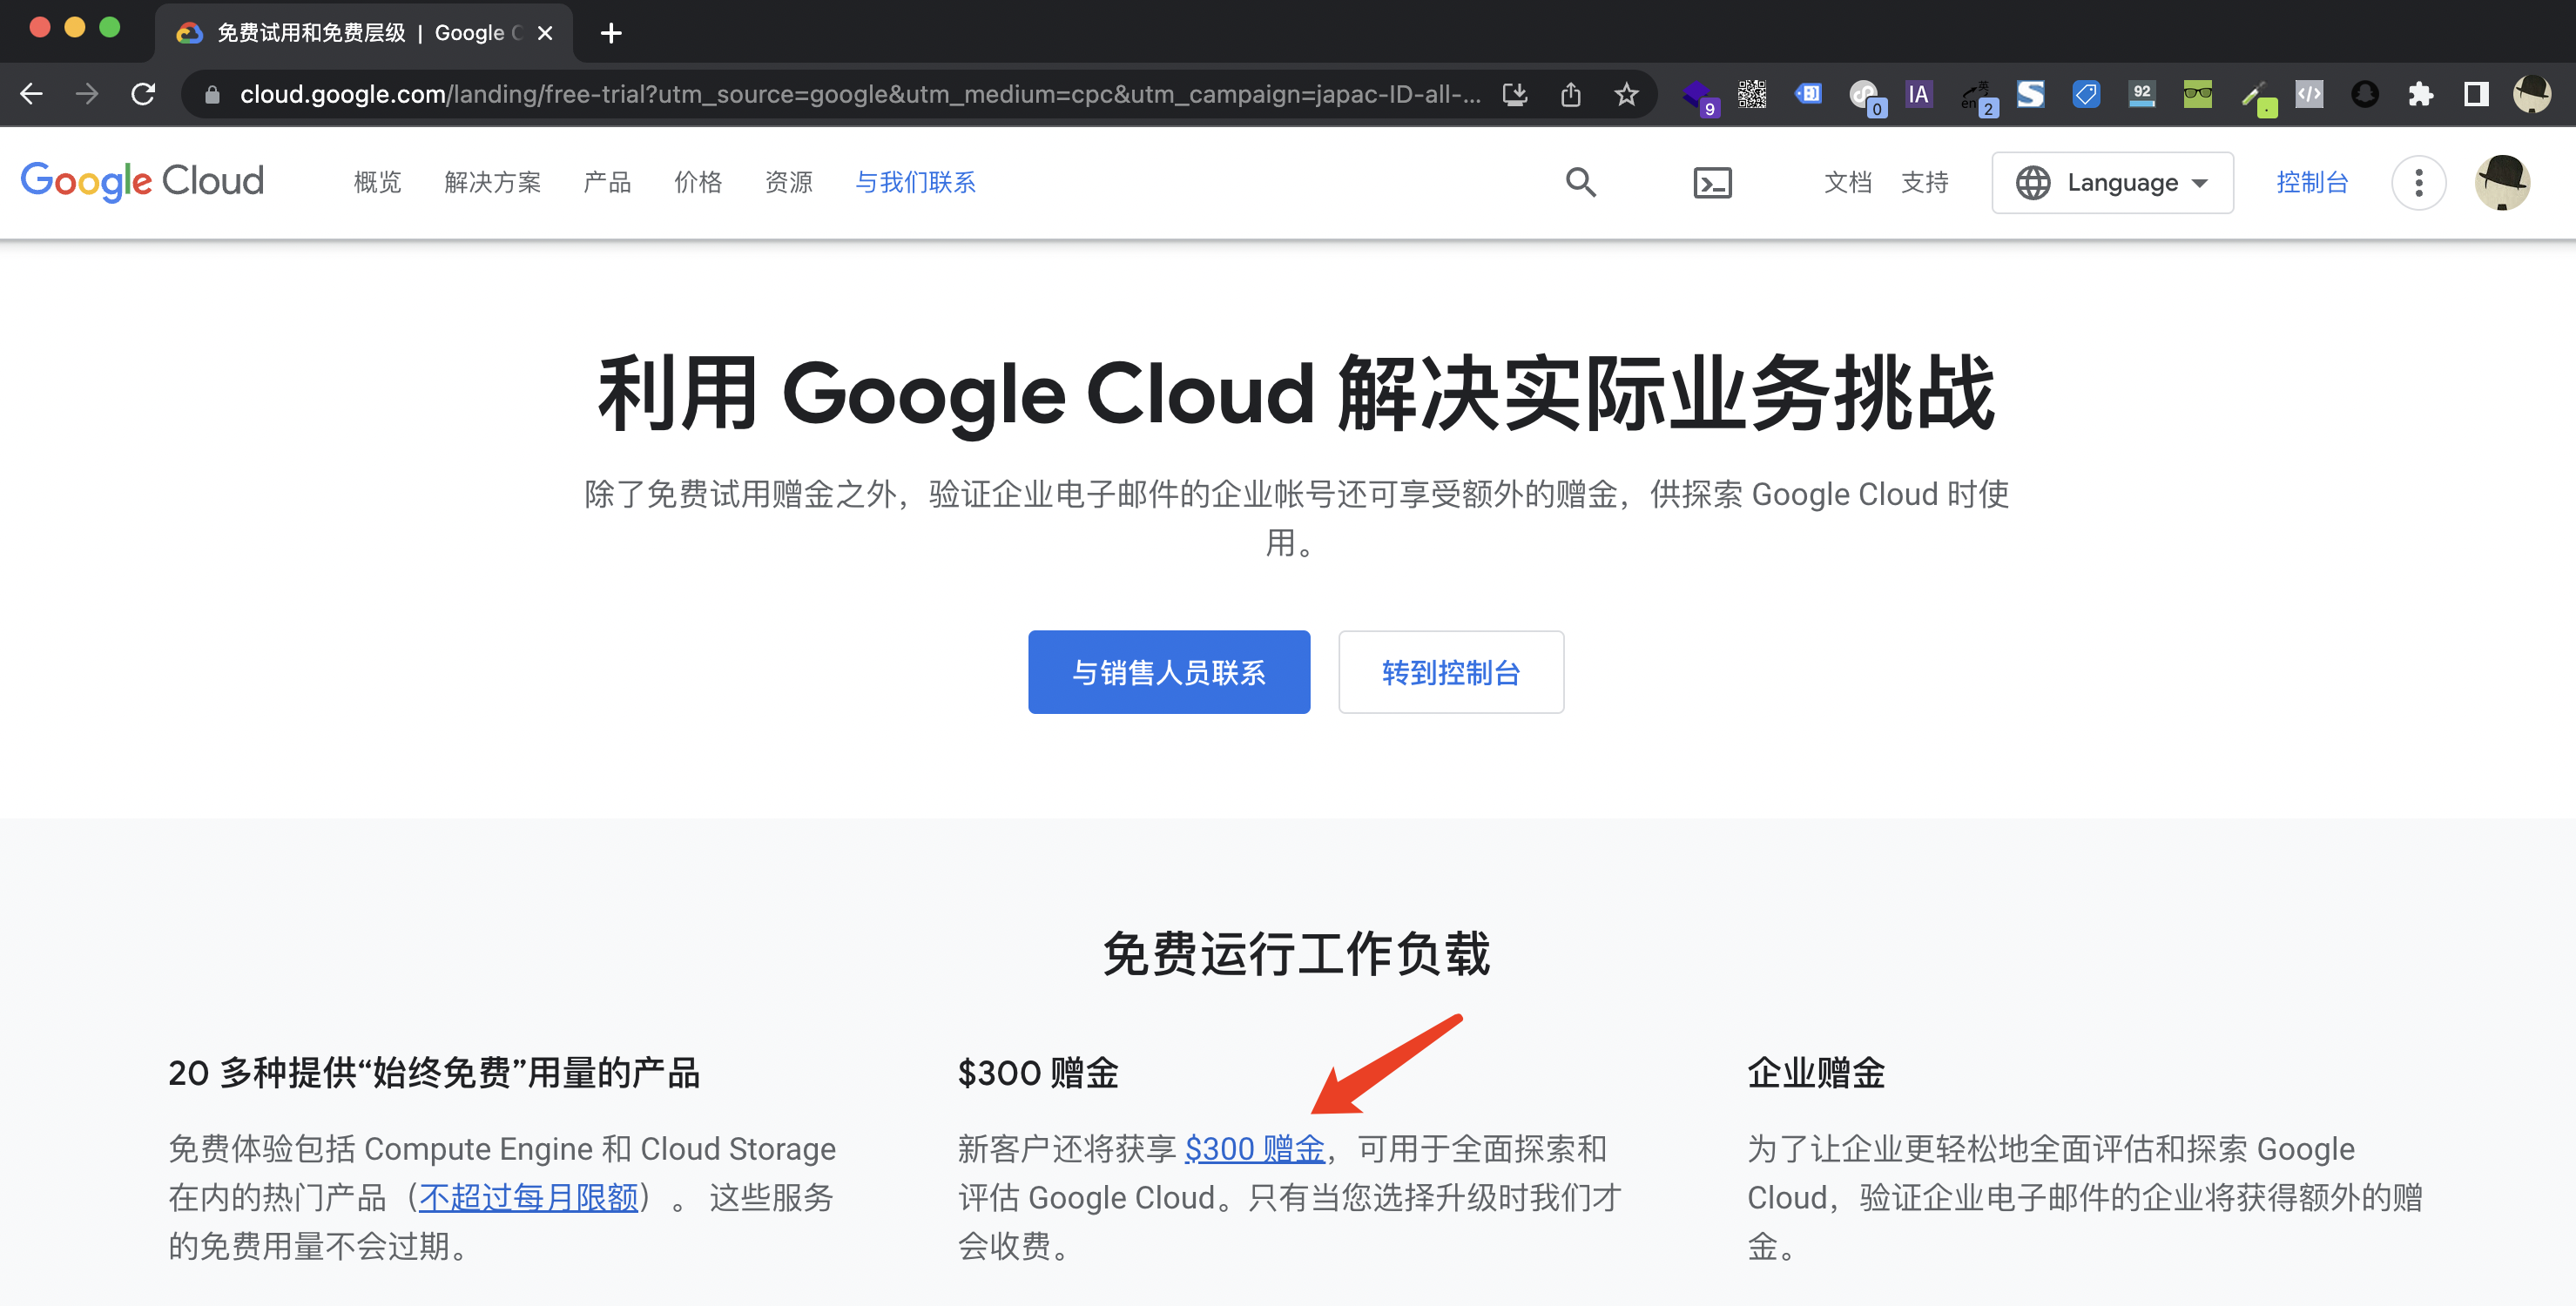 Google Cloud 新客户 $300 美金